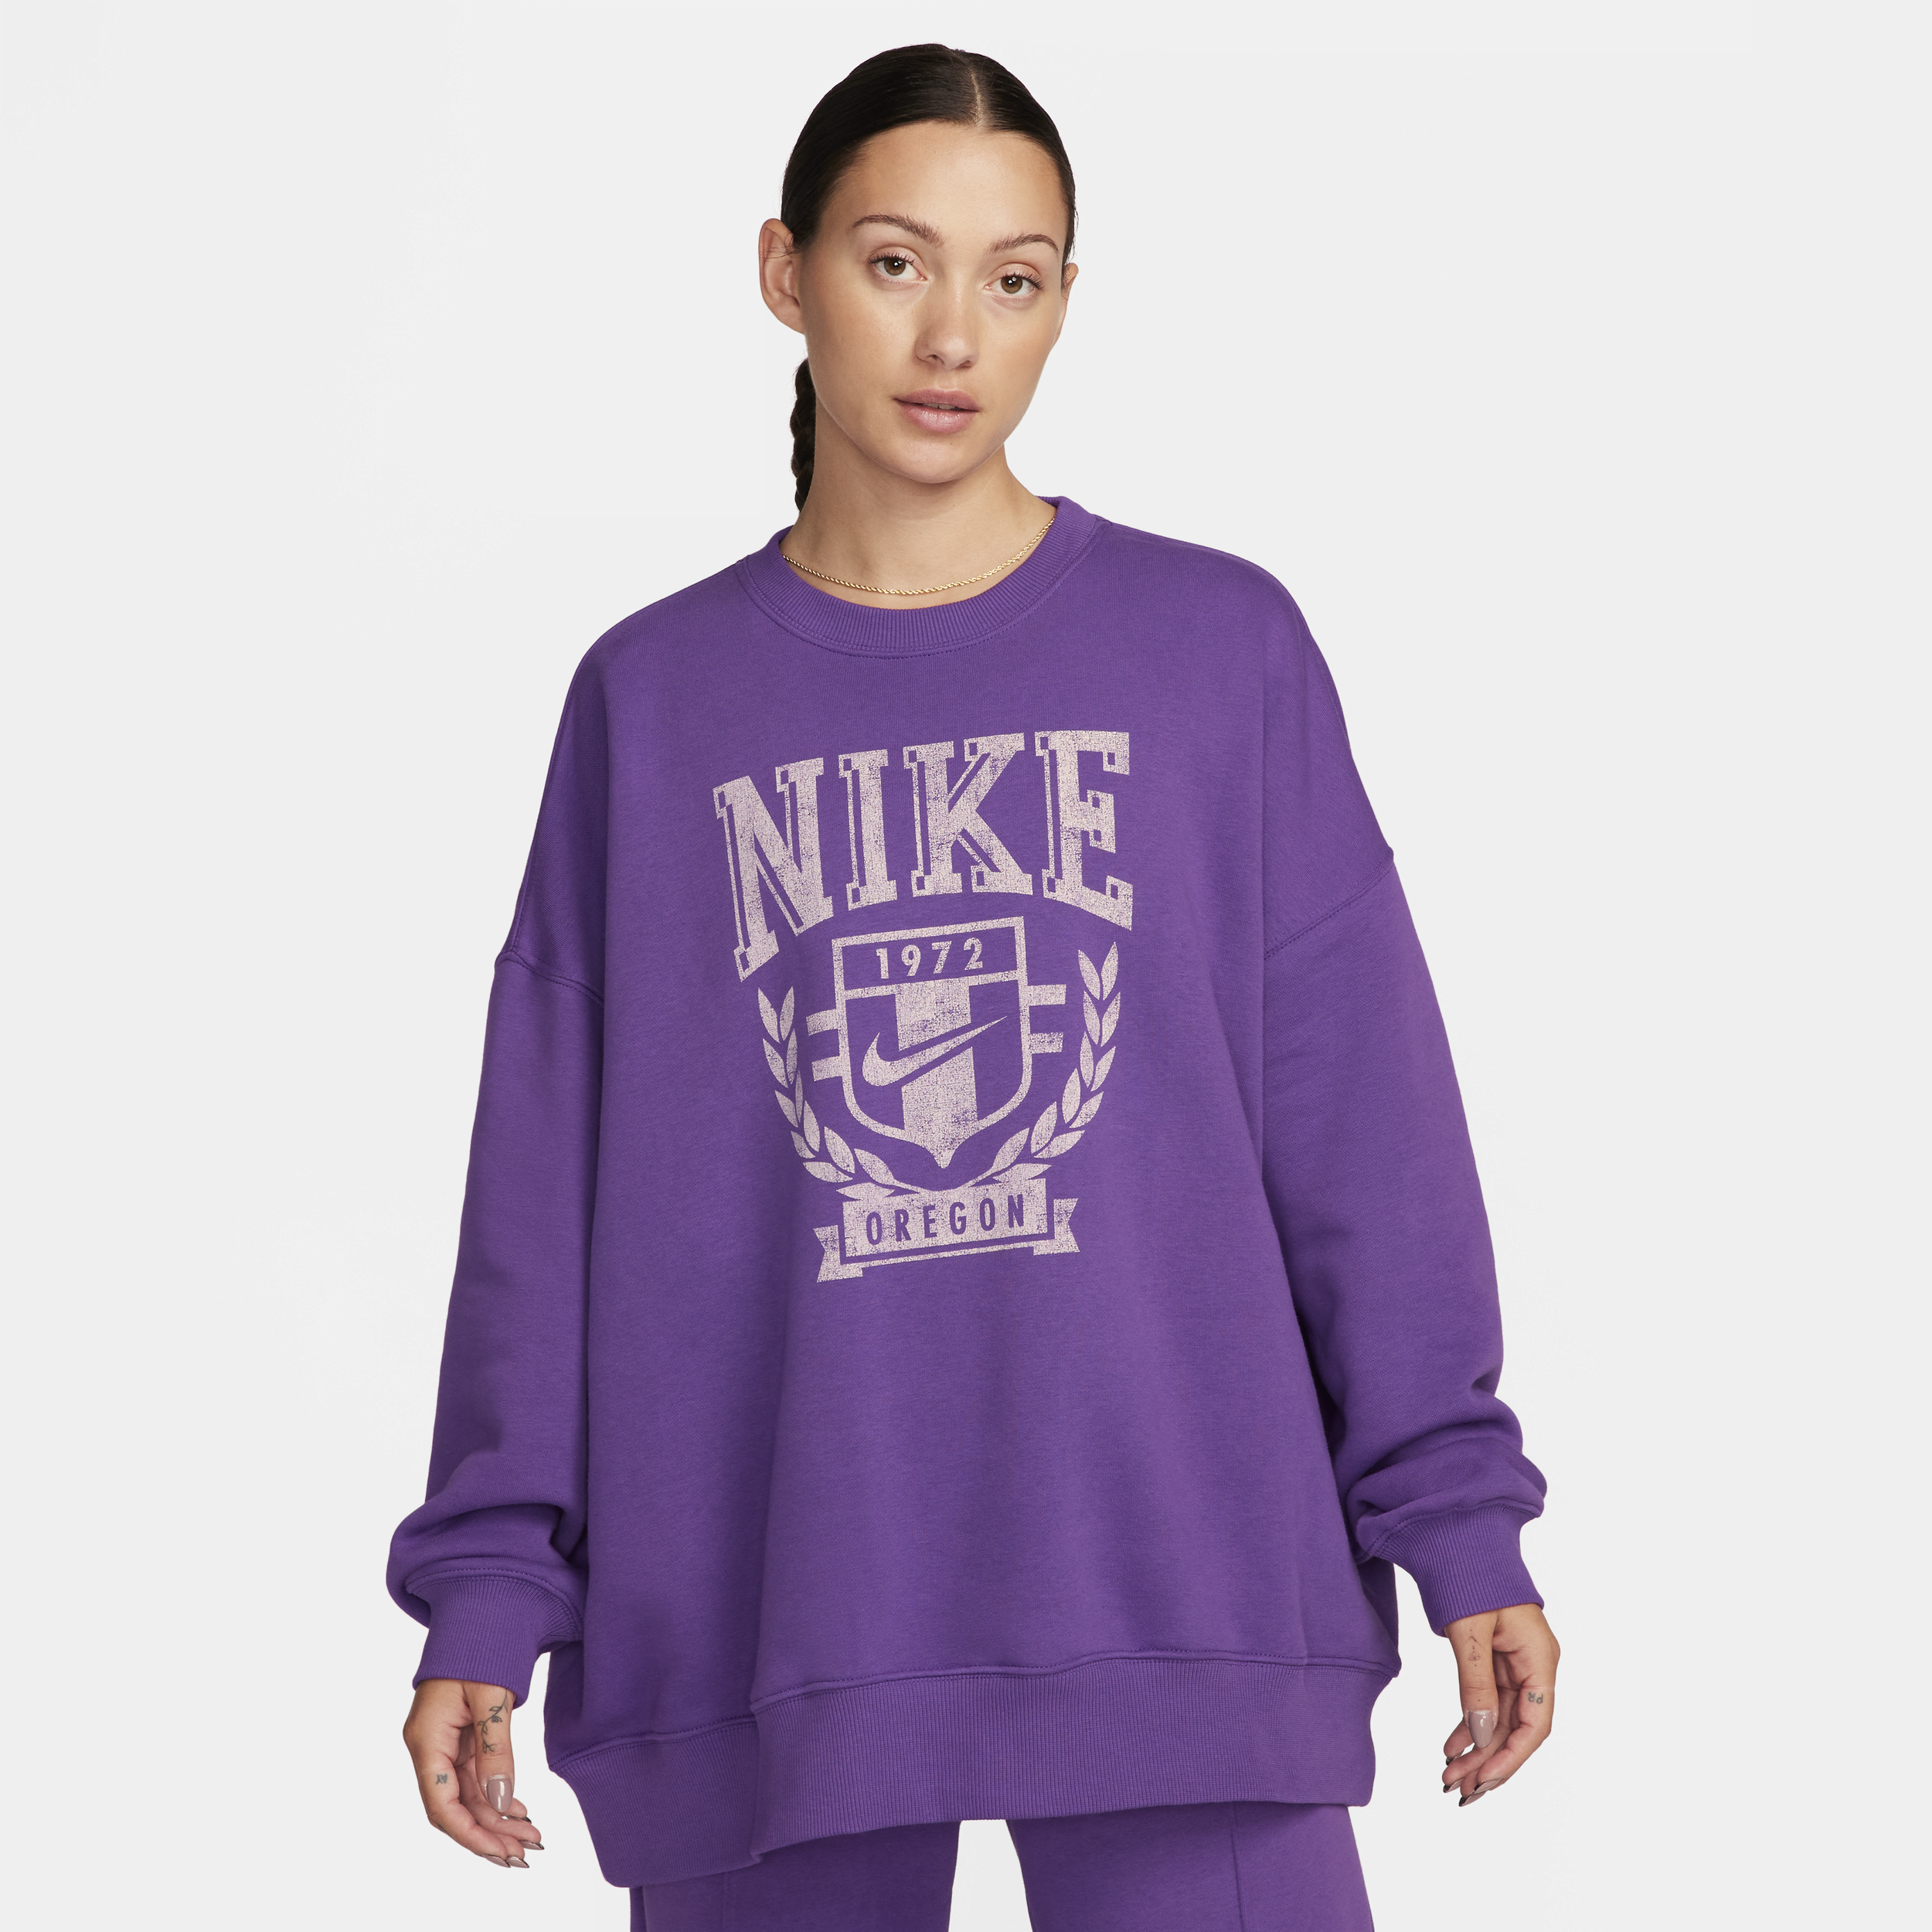 Overdimensioneret Nike Sportswear-sweatshirt i fleece med rund hals til kvinder - lilla